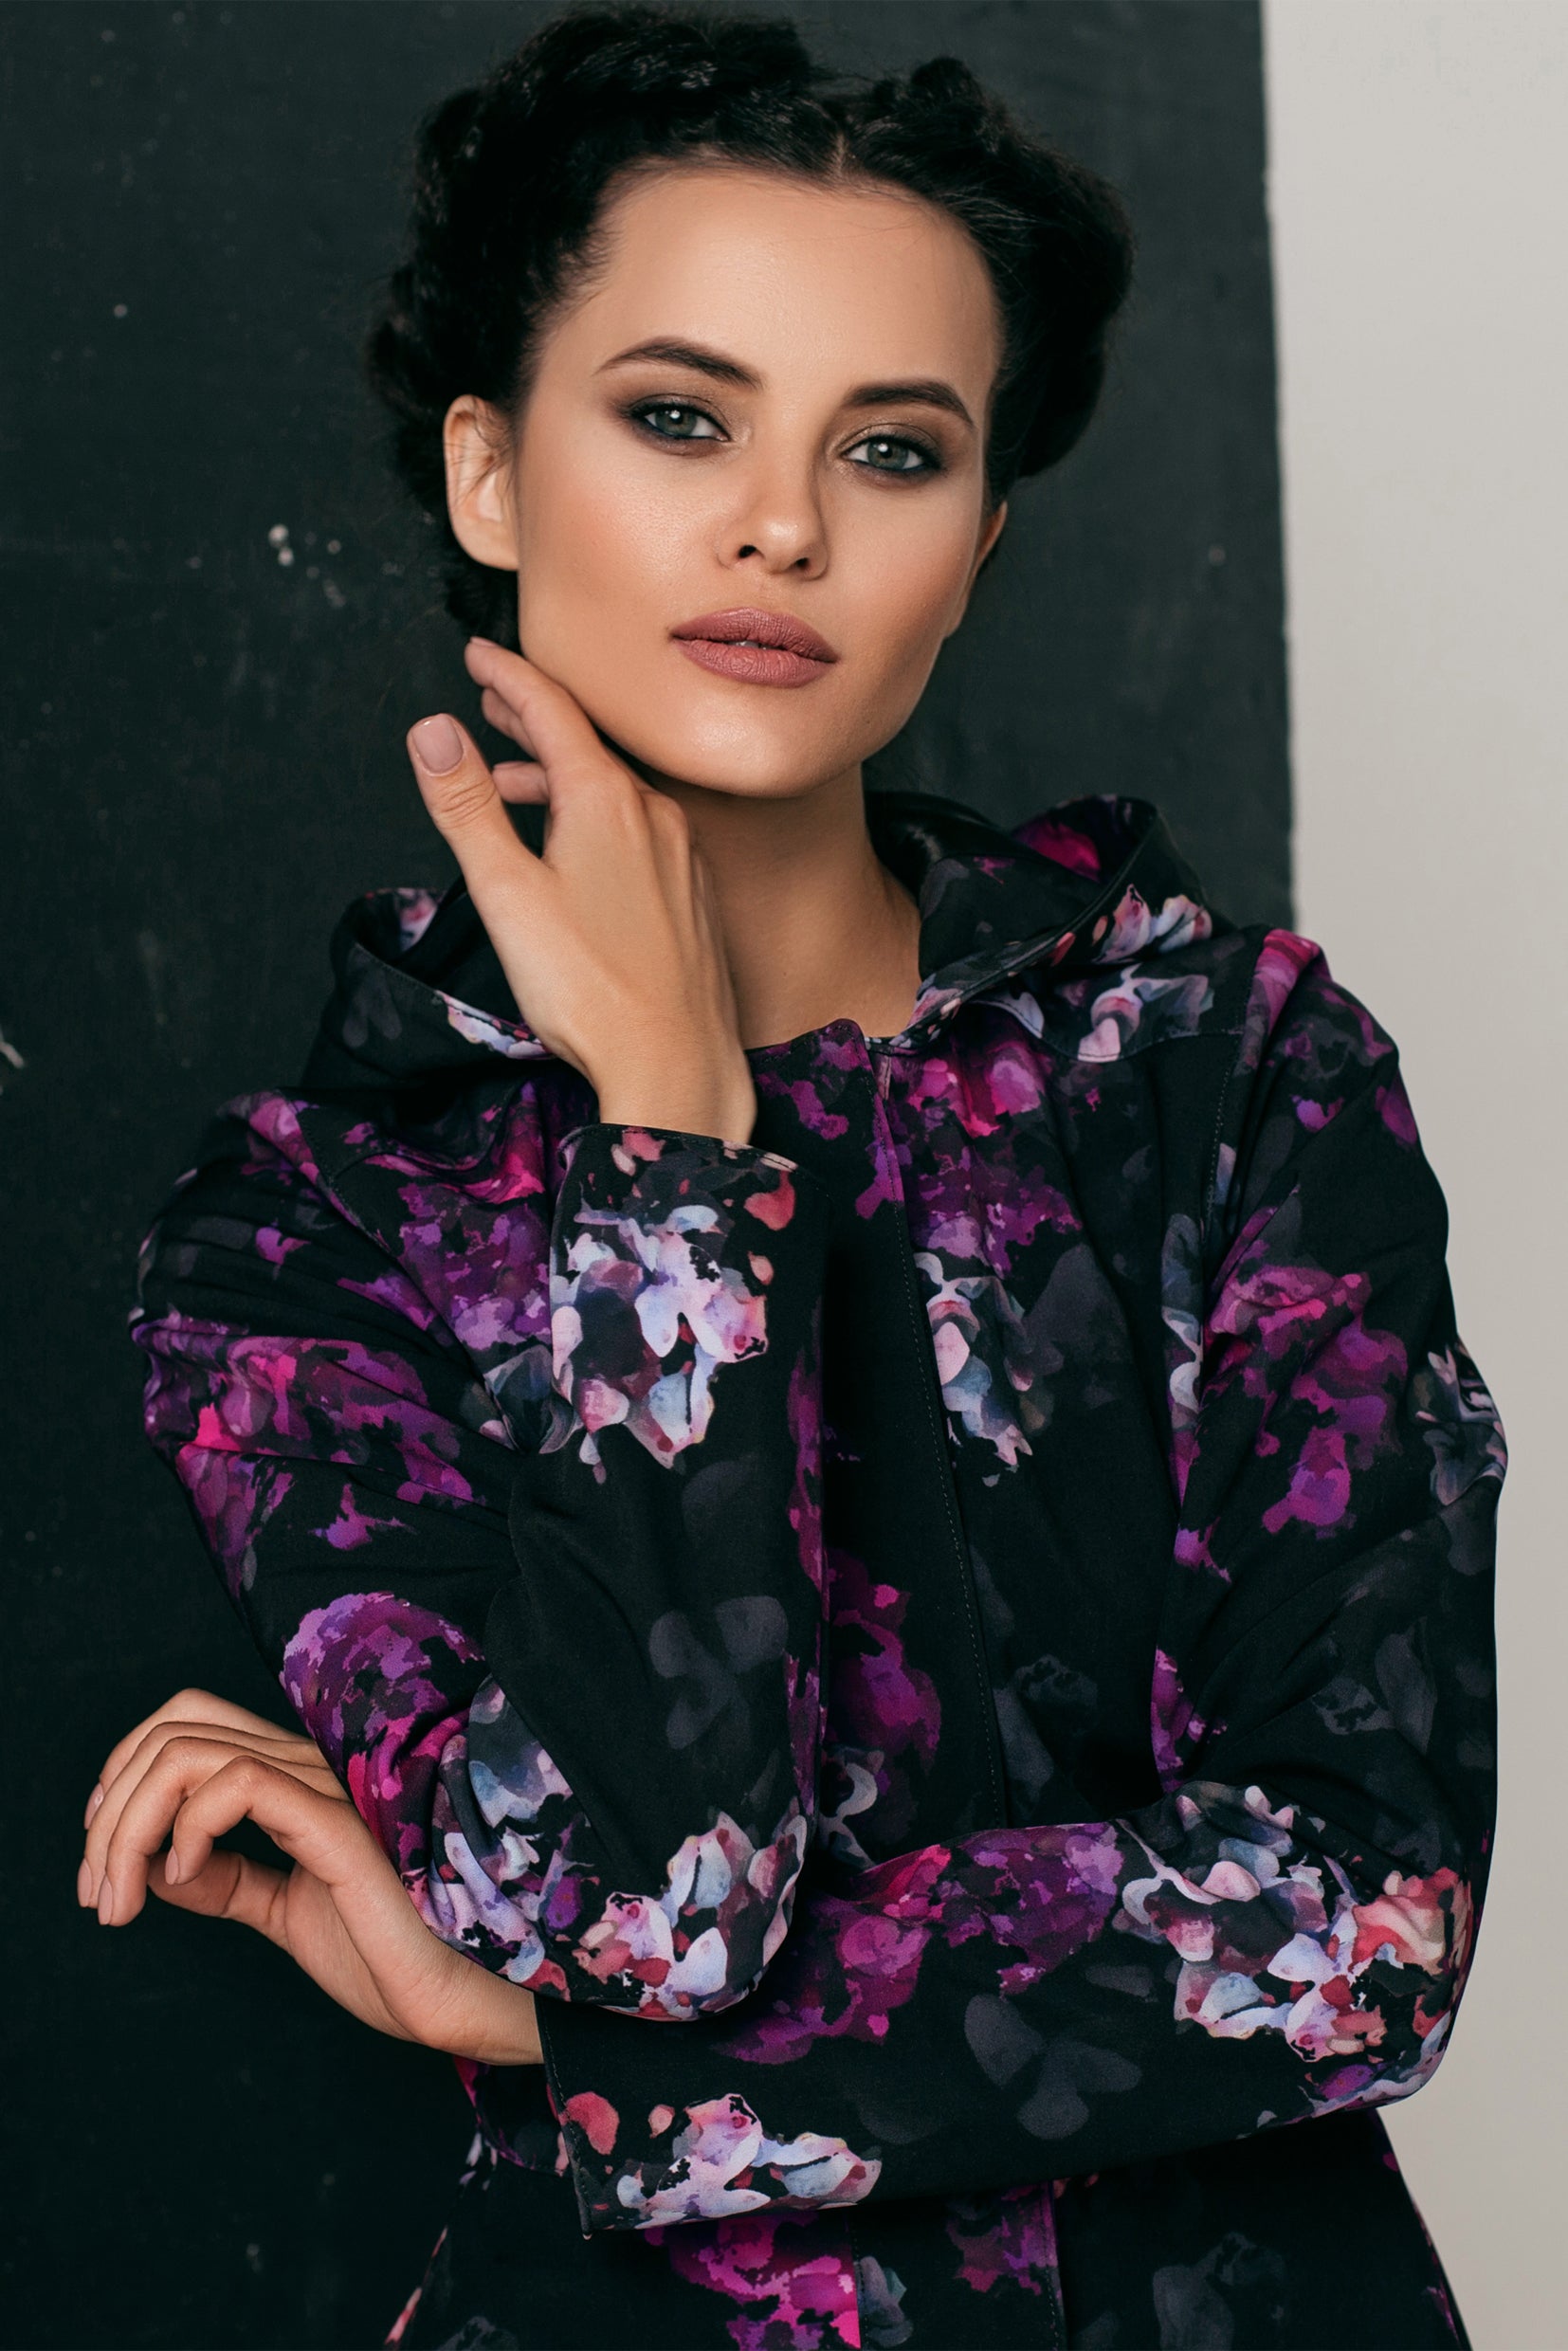 Black and Purple Design Raincoat by RainSisters